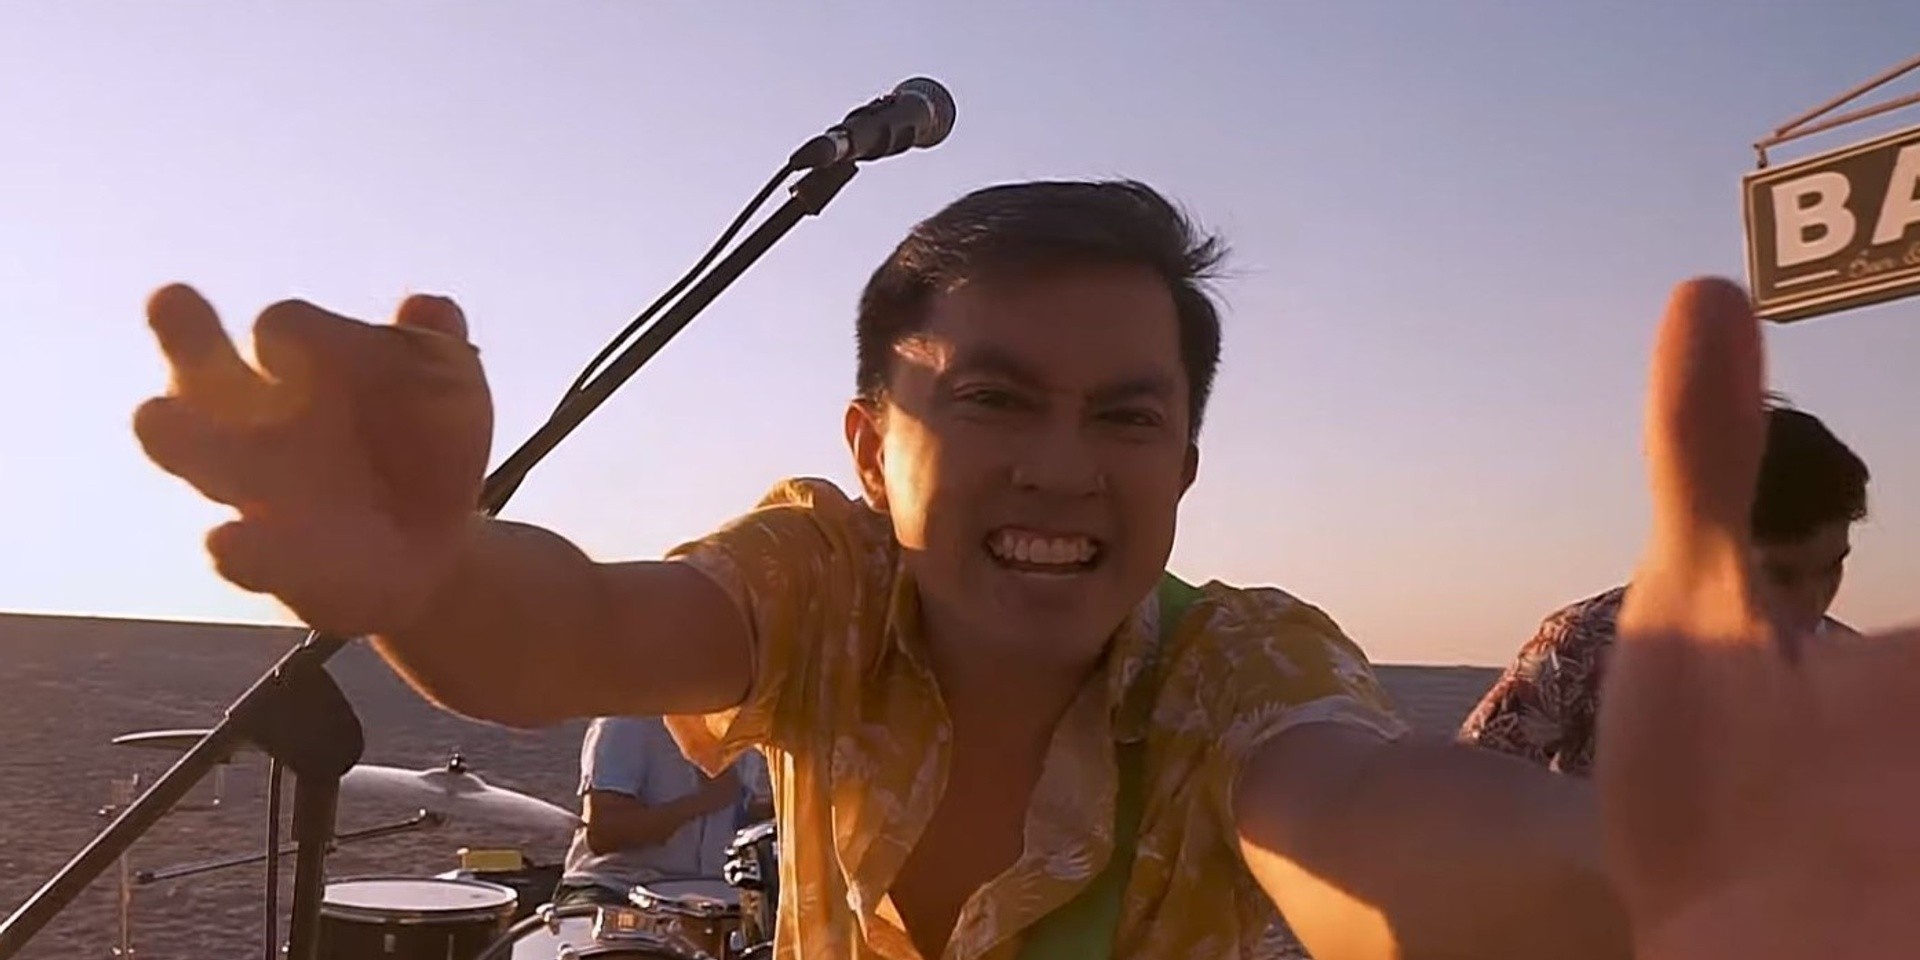 Delaney hit the beach in feel-good 'Lakbay' music video – watch